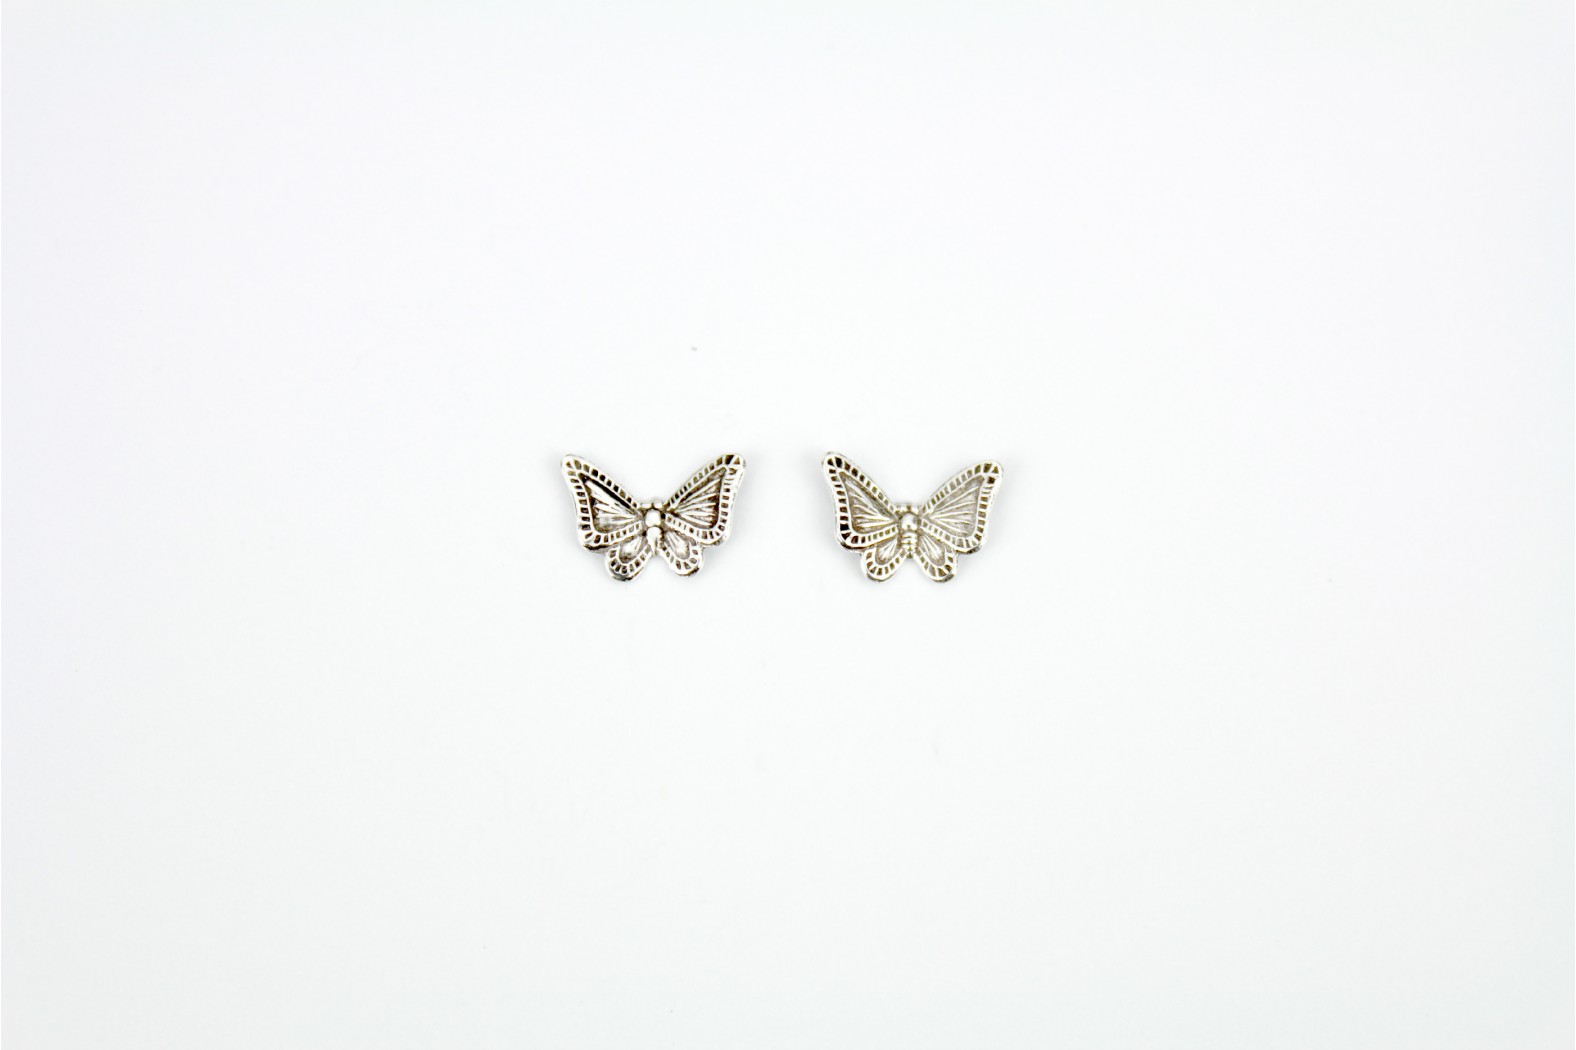 Butterfly Aged Detailing silver stud earrings